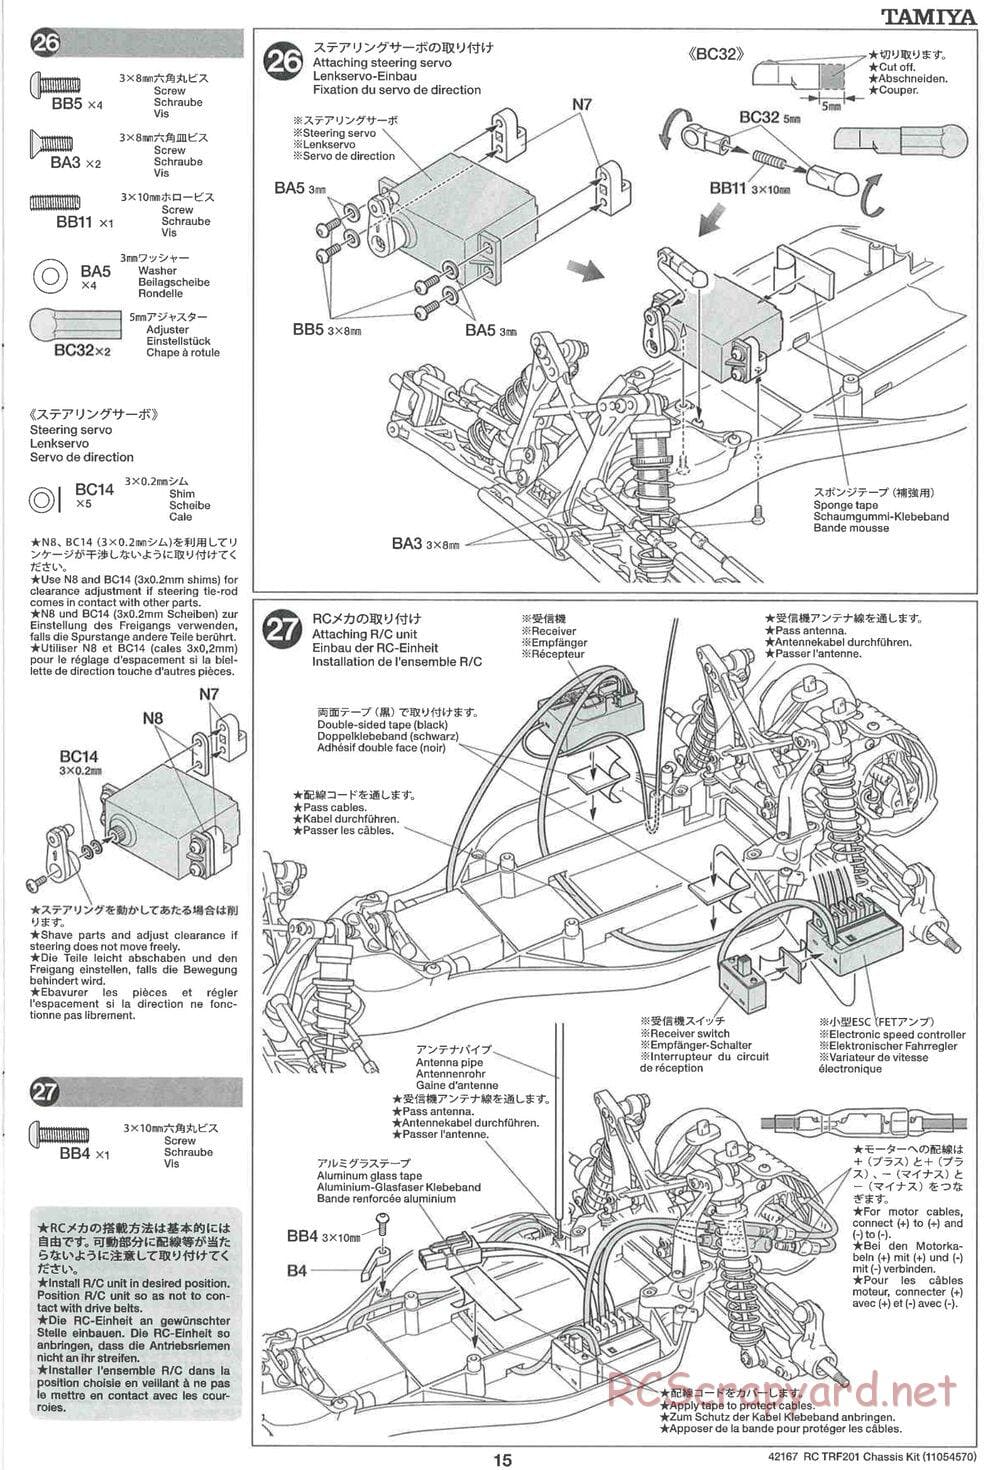 Tamiya - TRF201 Chassis - Manual - Page 15